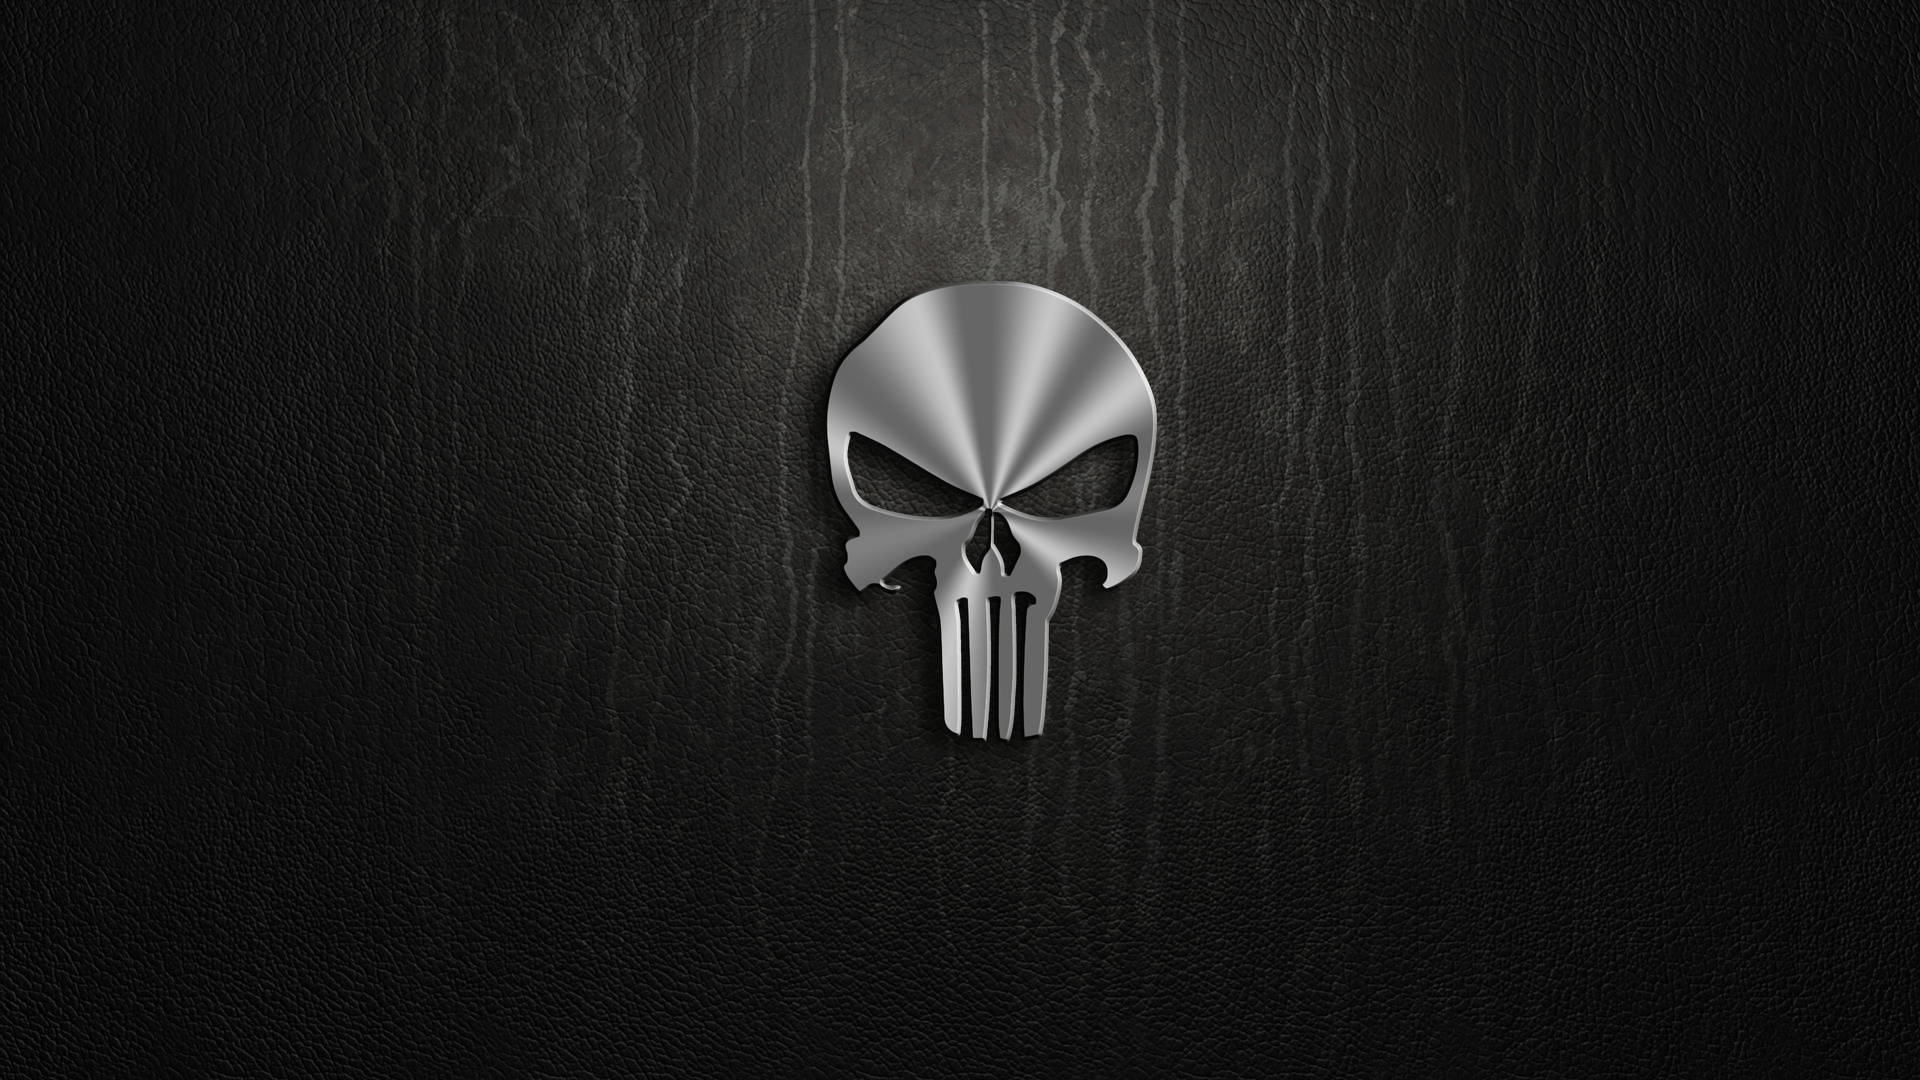 Punisher Skull On Black Leather Background